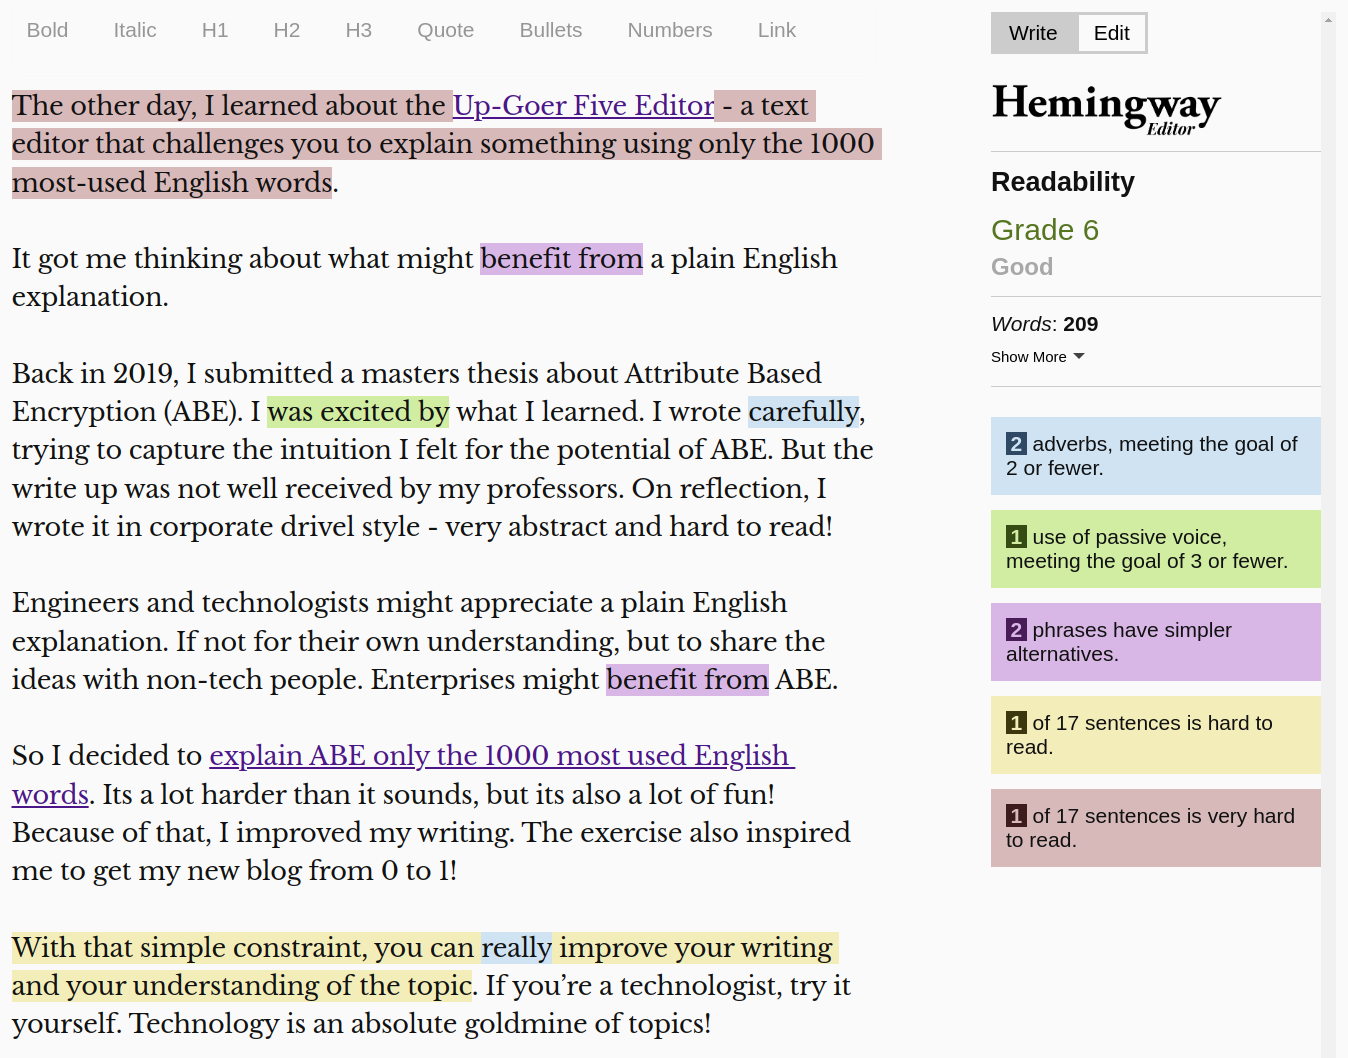 example of feedback on prose using Hemingway Editor